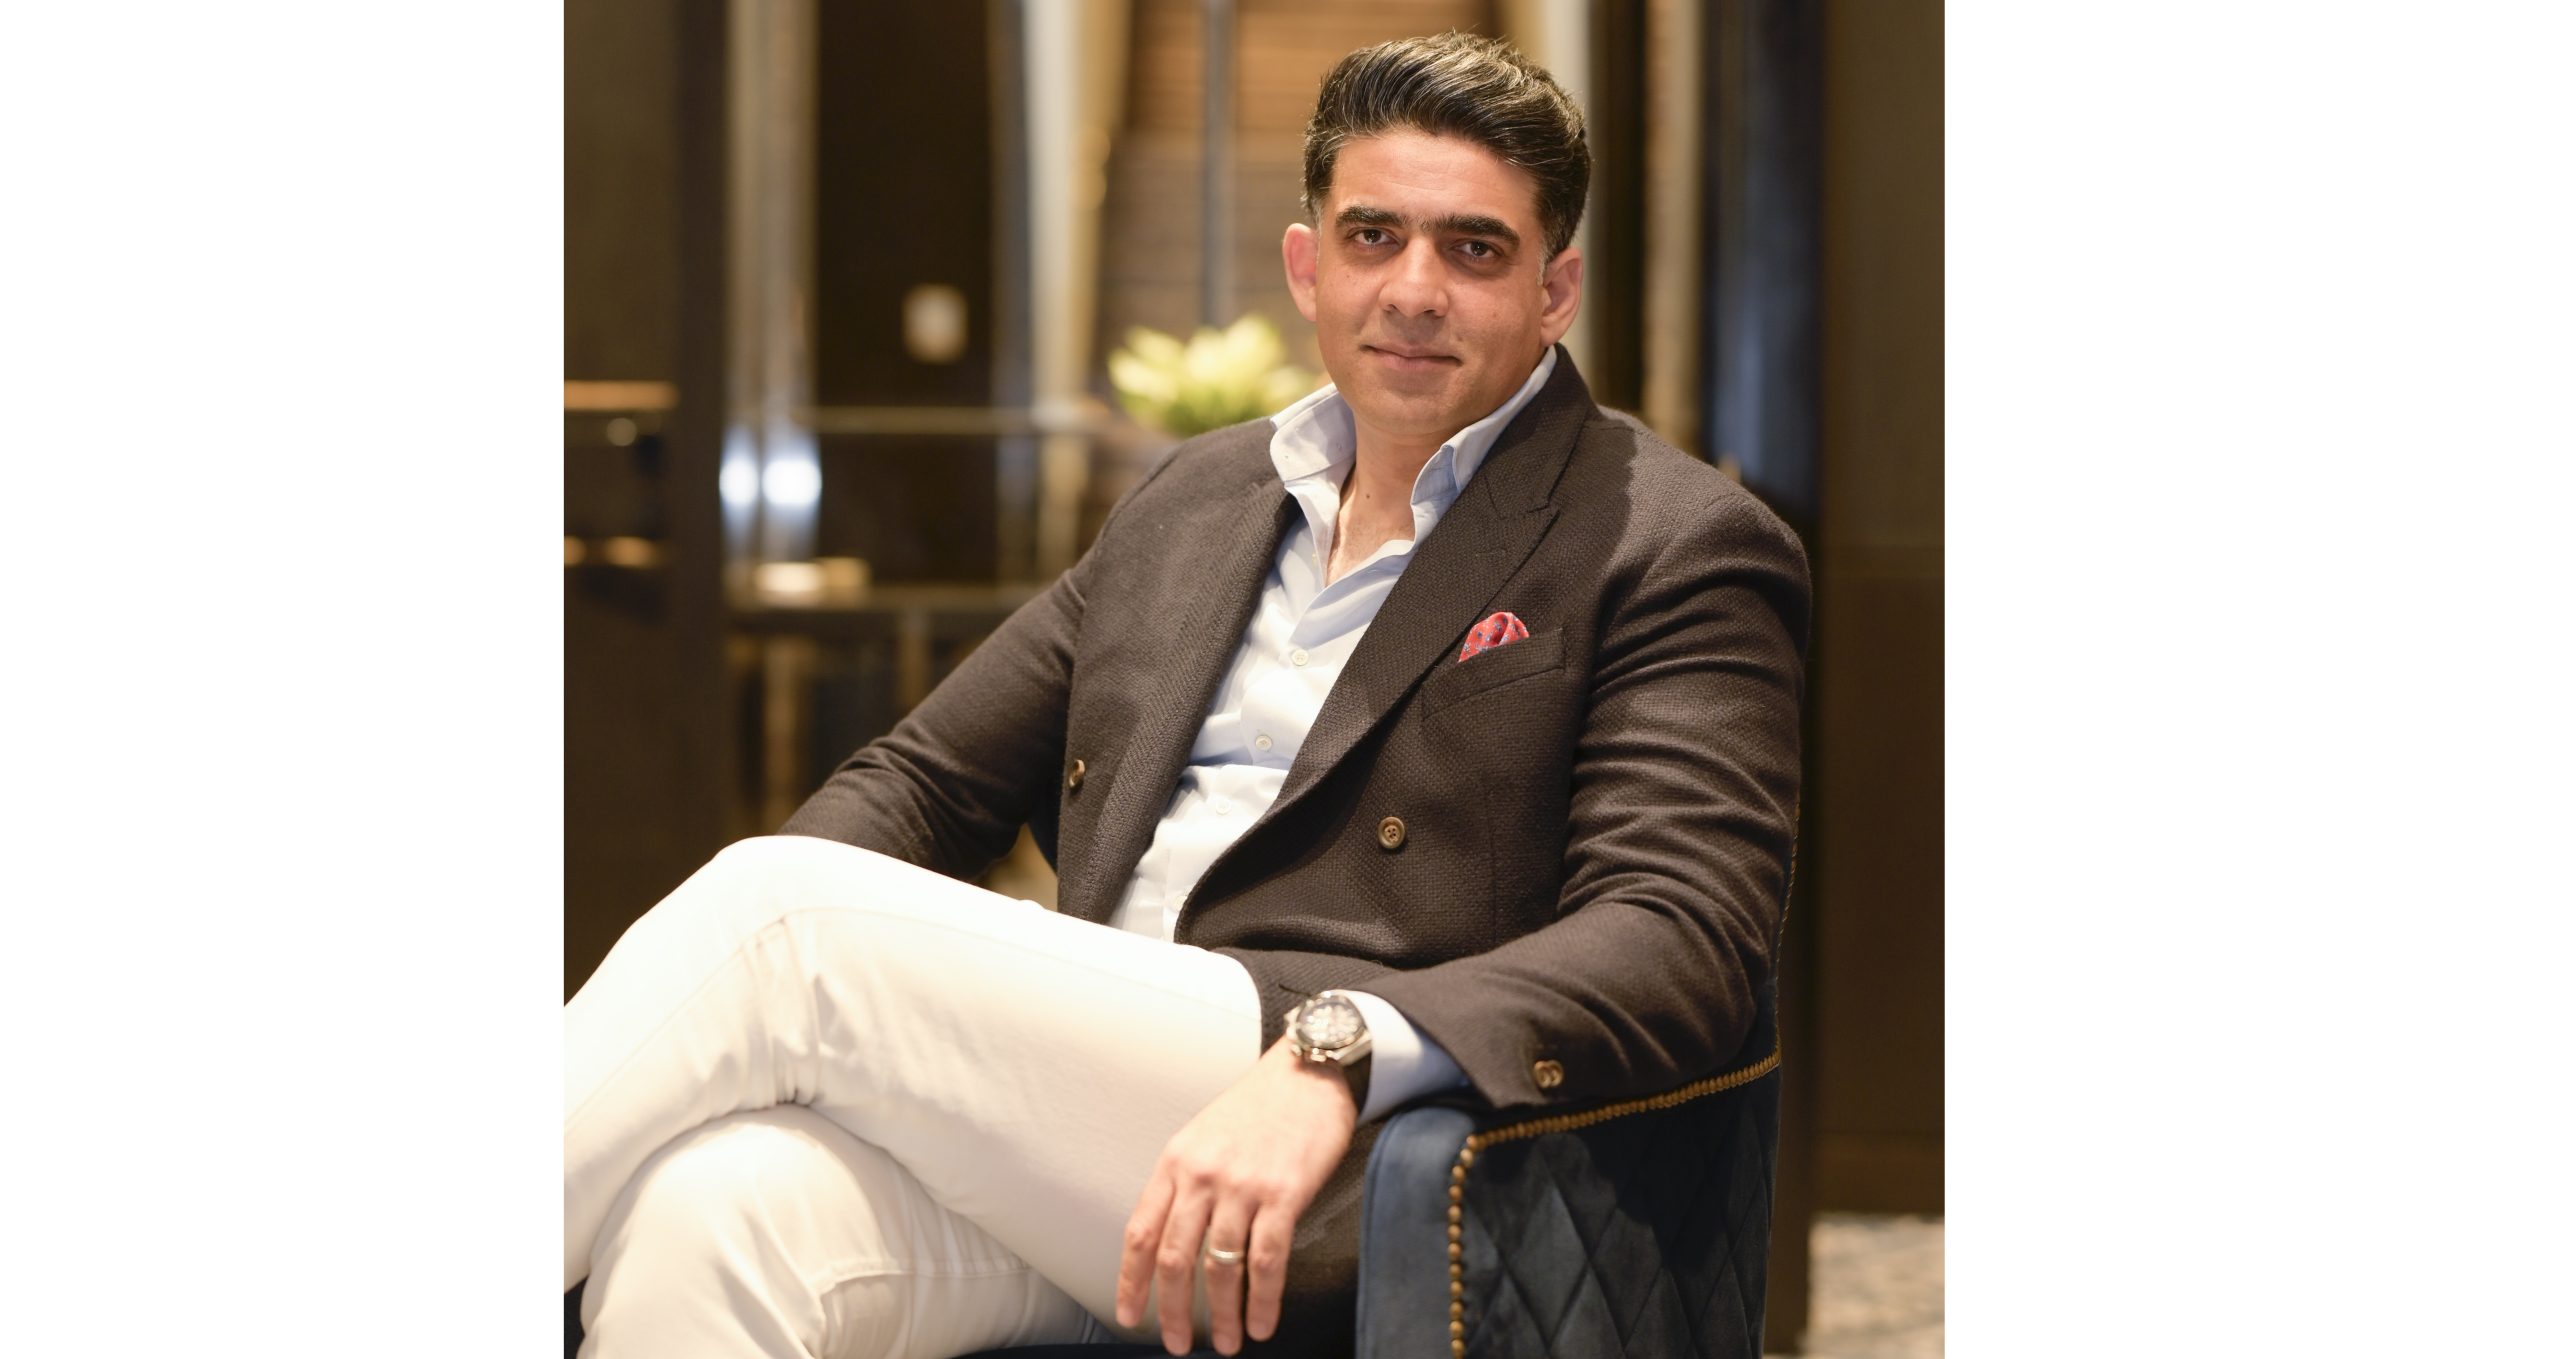 Khalid Wani, Senior Director Sales, India, Western Digital